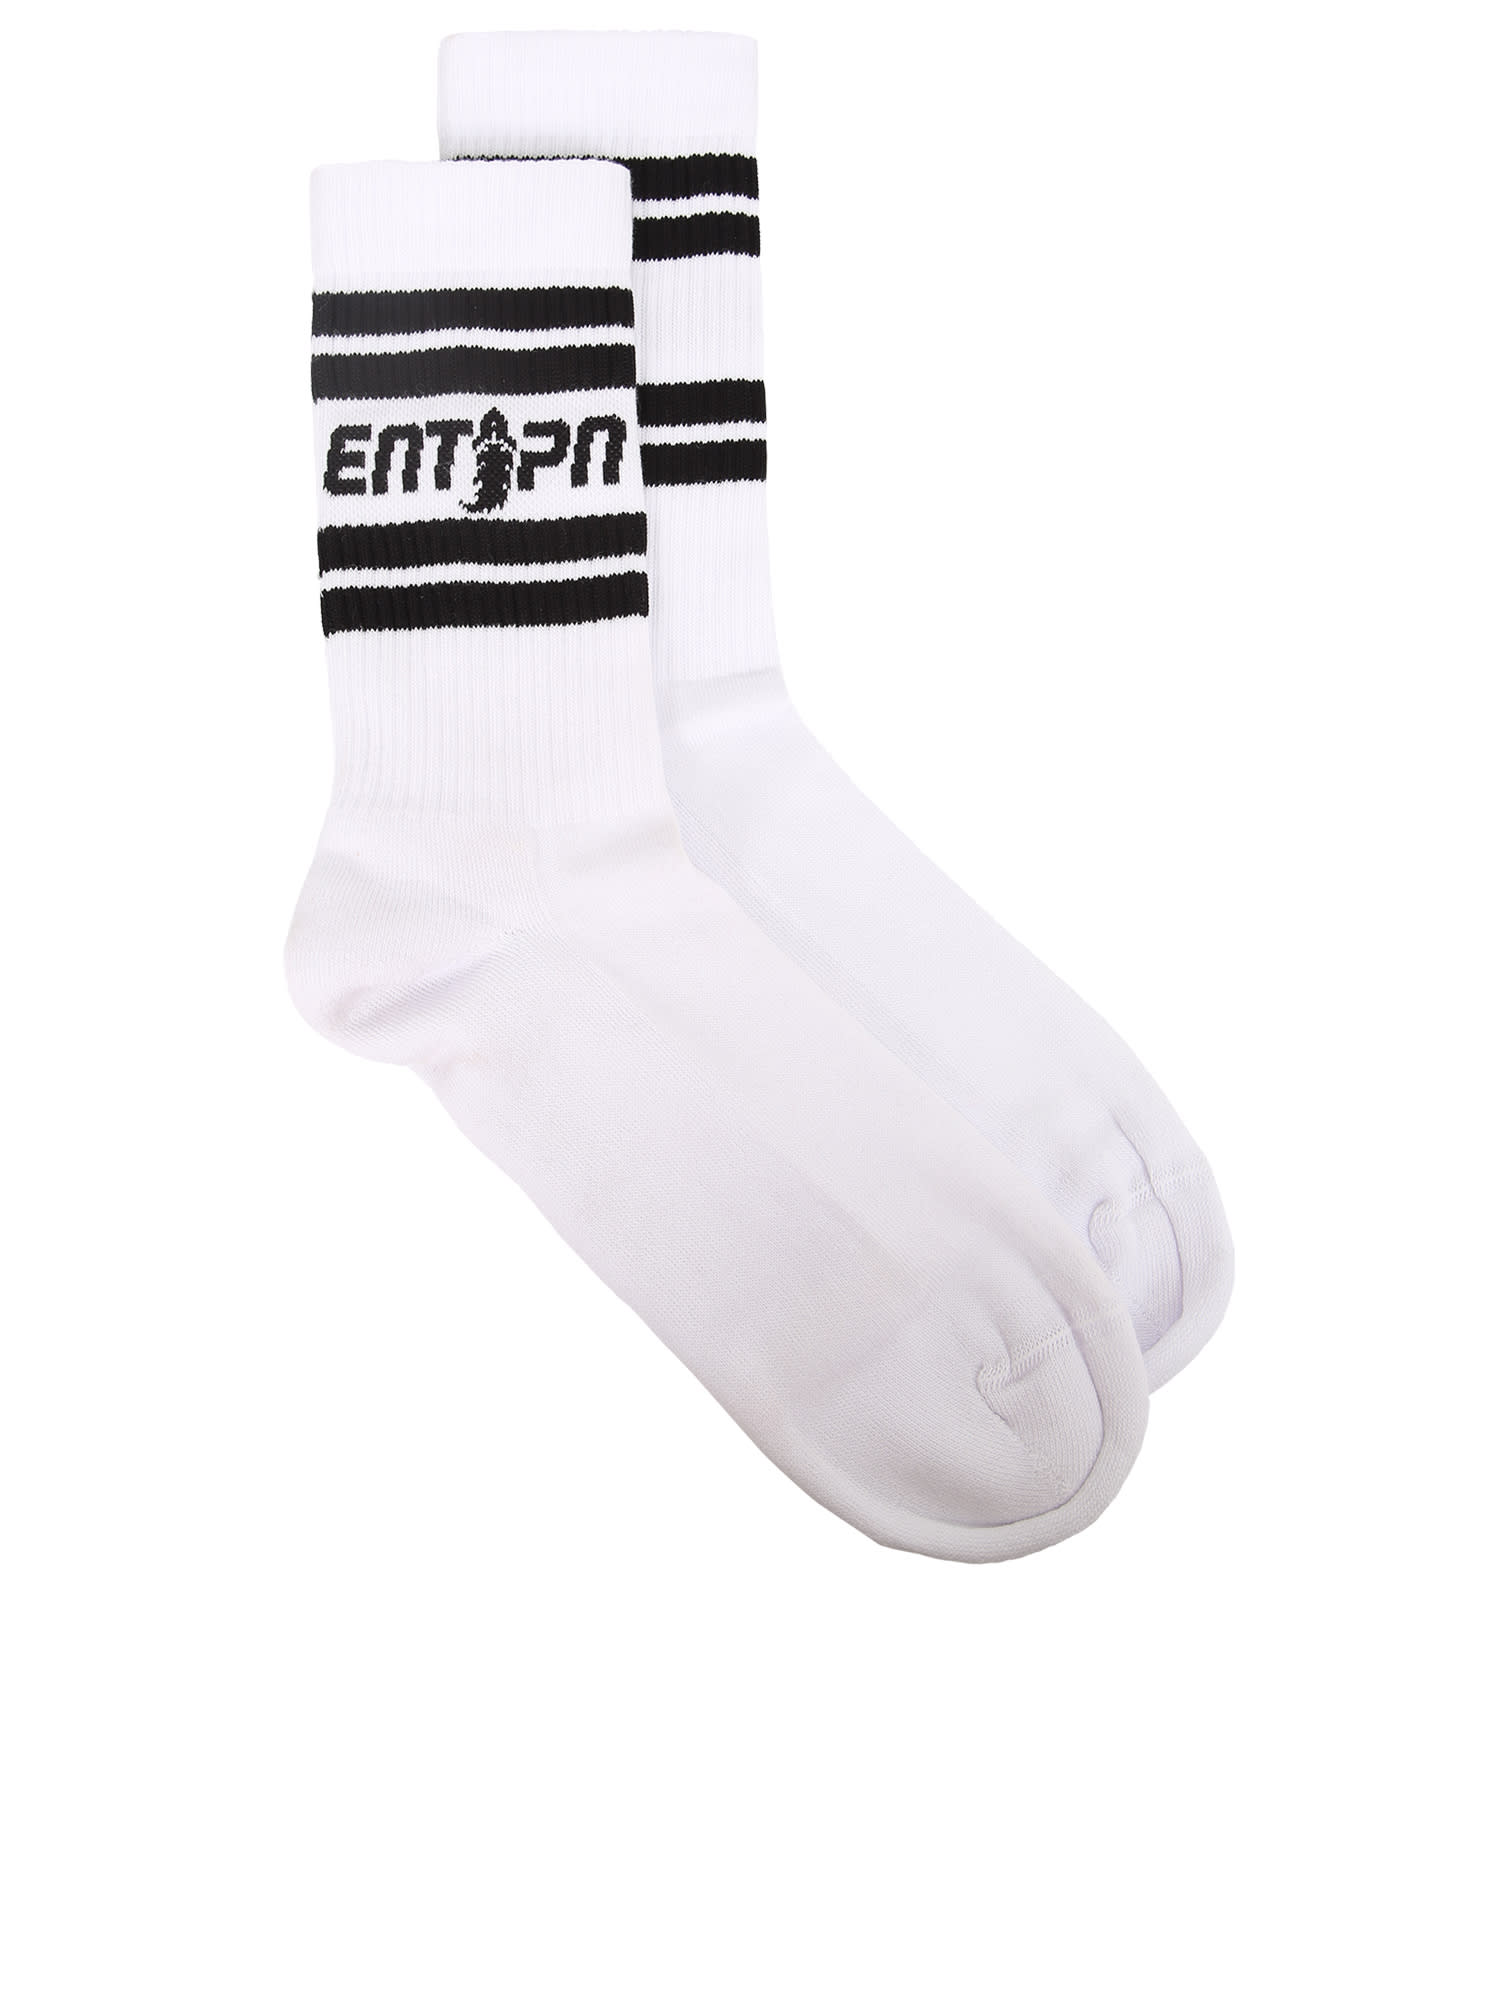 Enterprise Japan Logo Socks